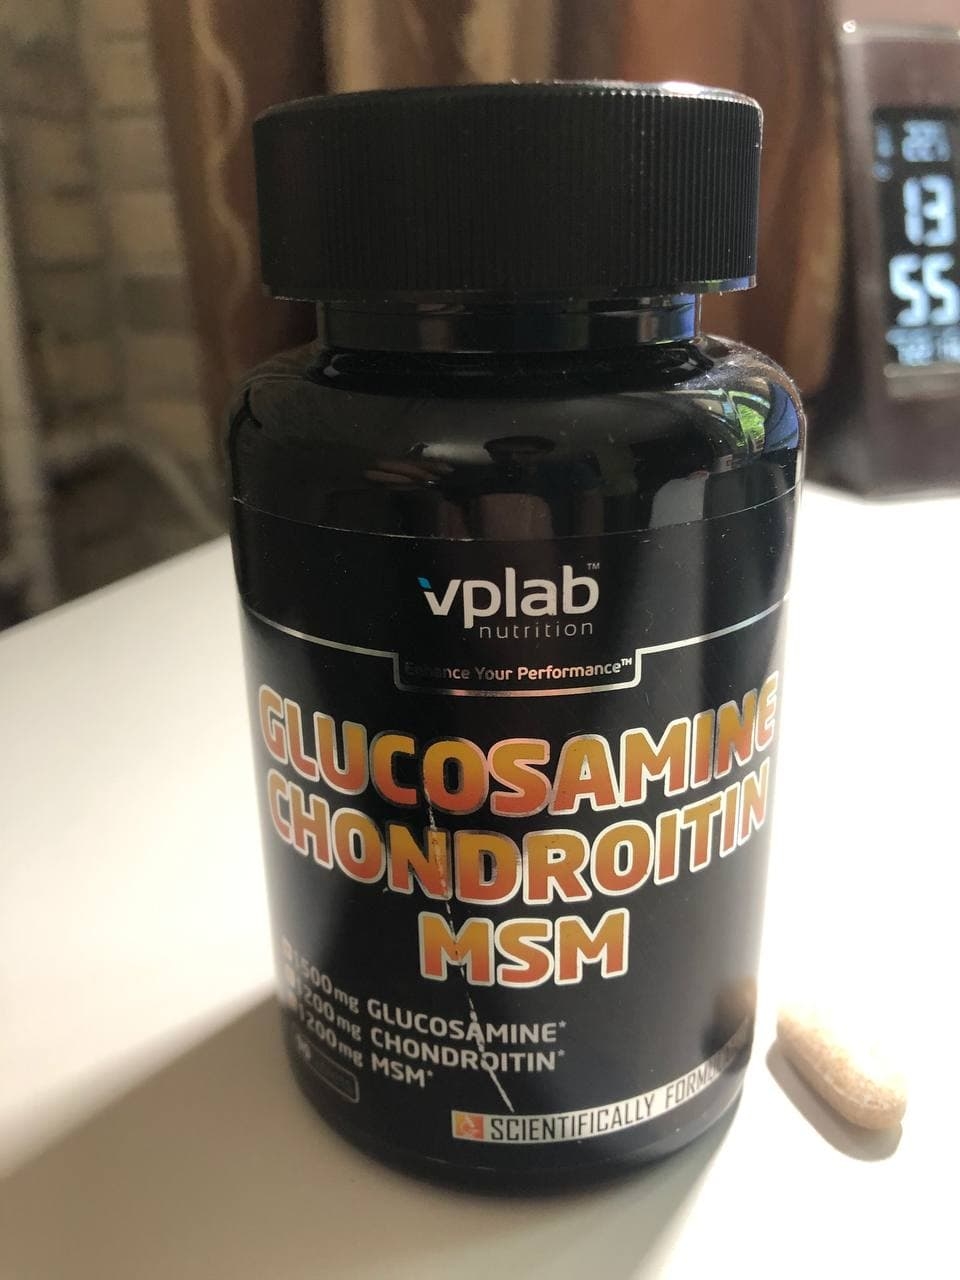 Glucosamine & Chondroitin & MSM от VPLAB - Огромная польза для суставов.